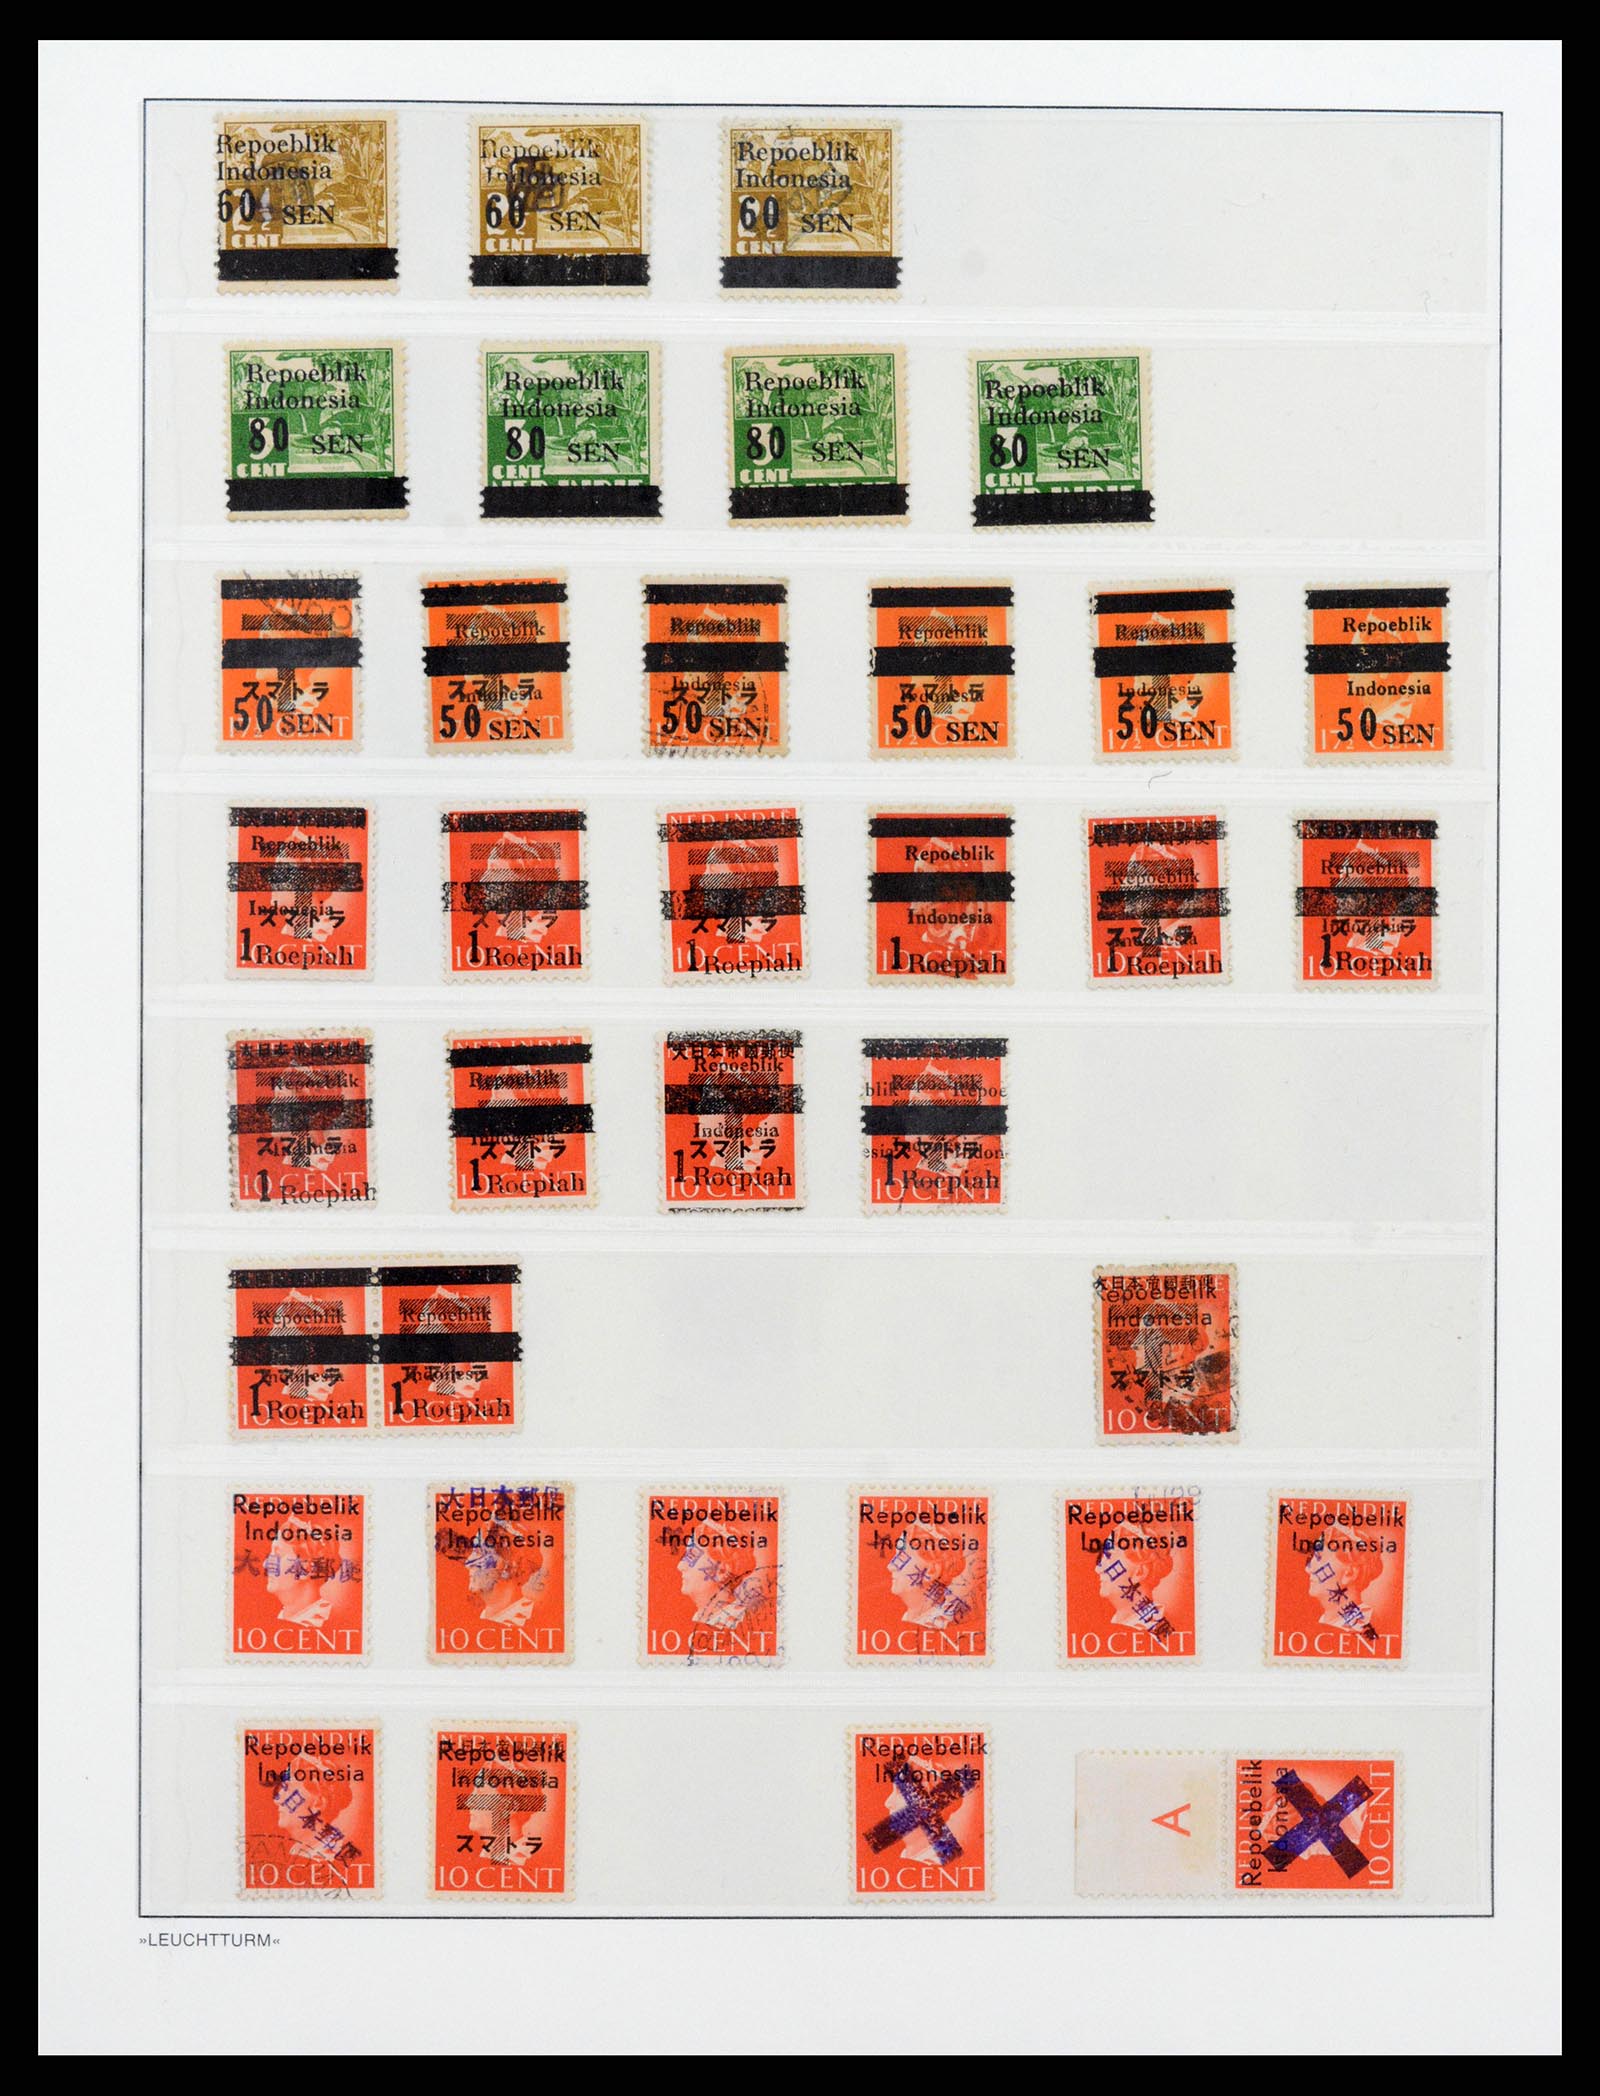 37435 041 - Stamp collection 37435 Indonesia interim period 1945-1948.